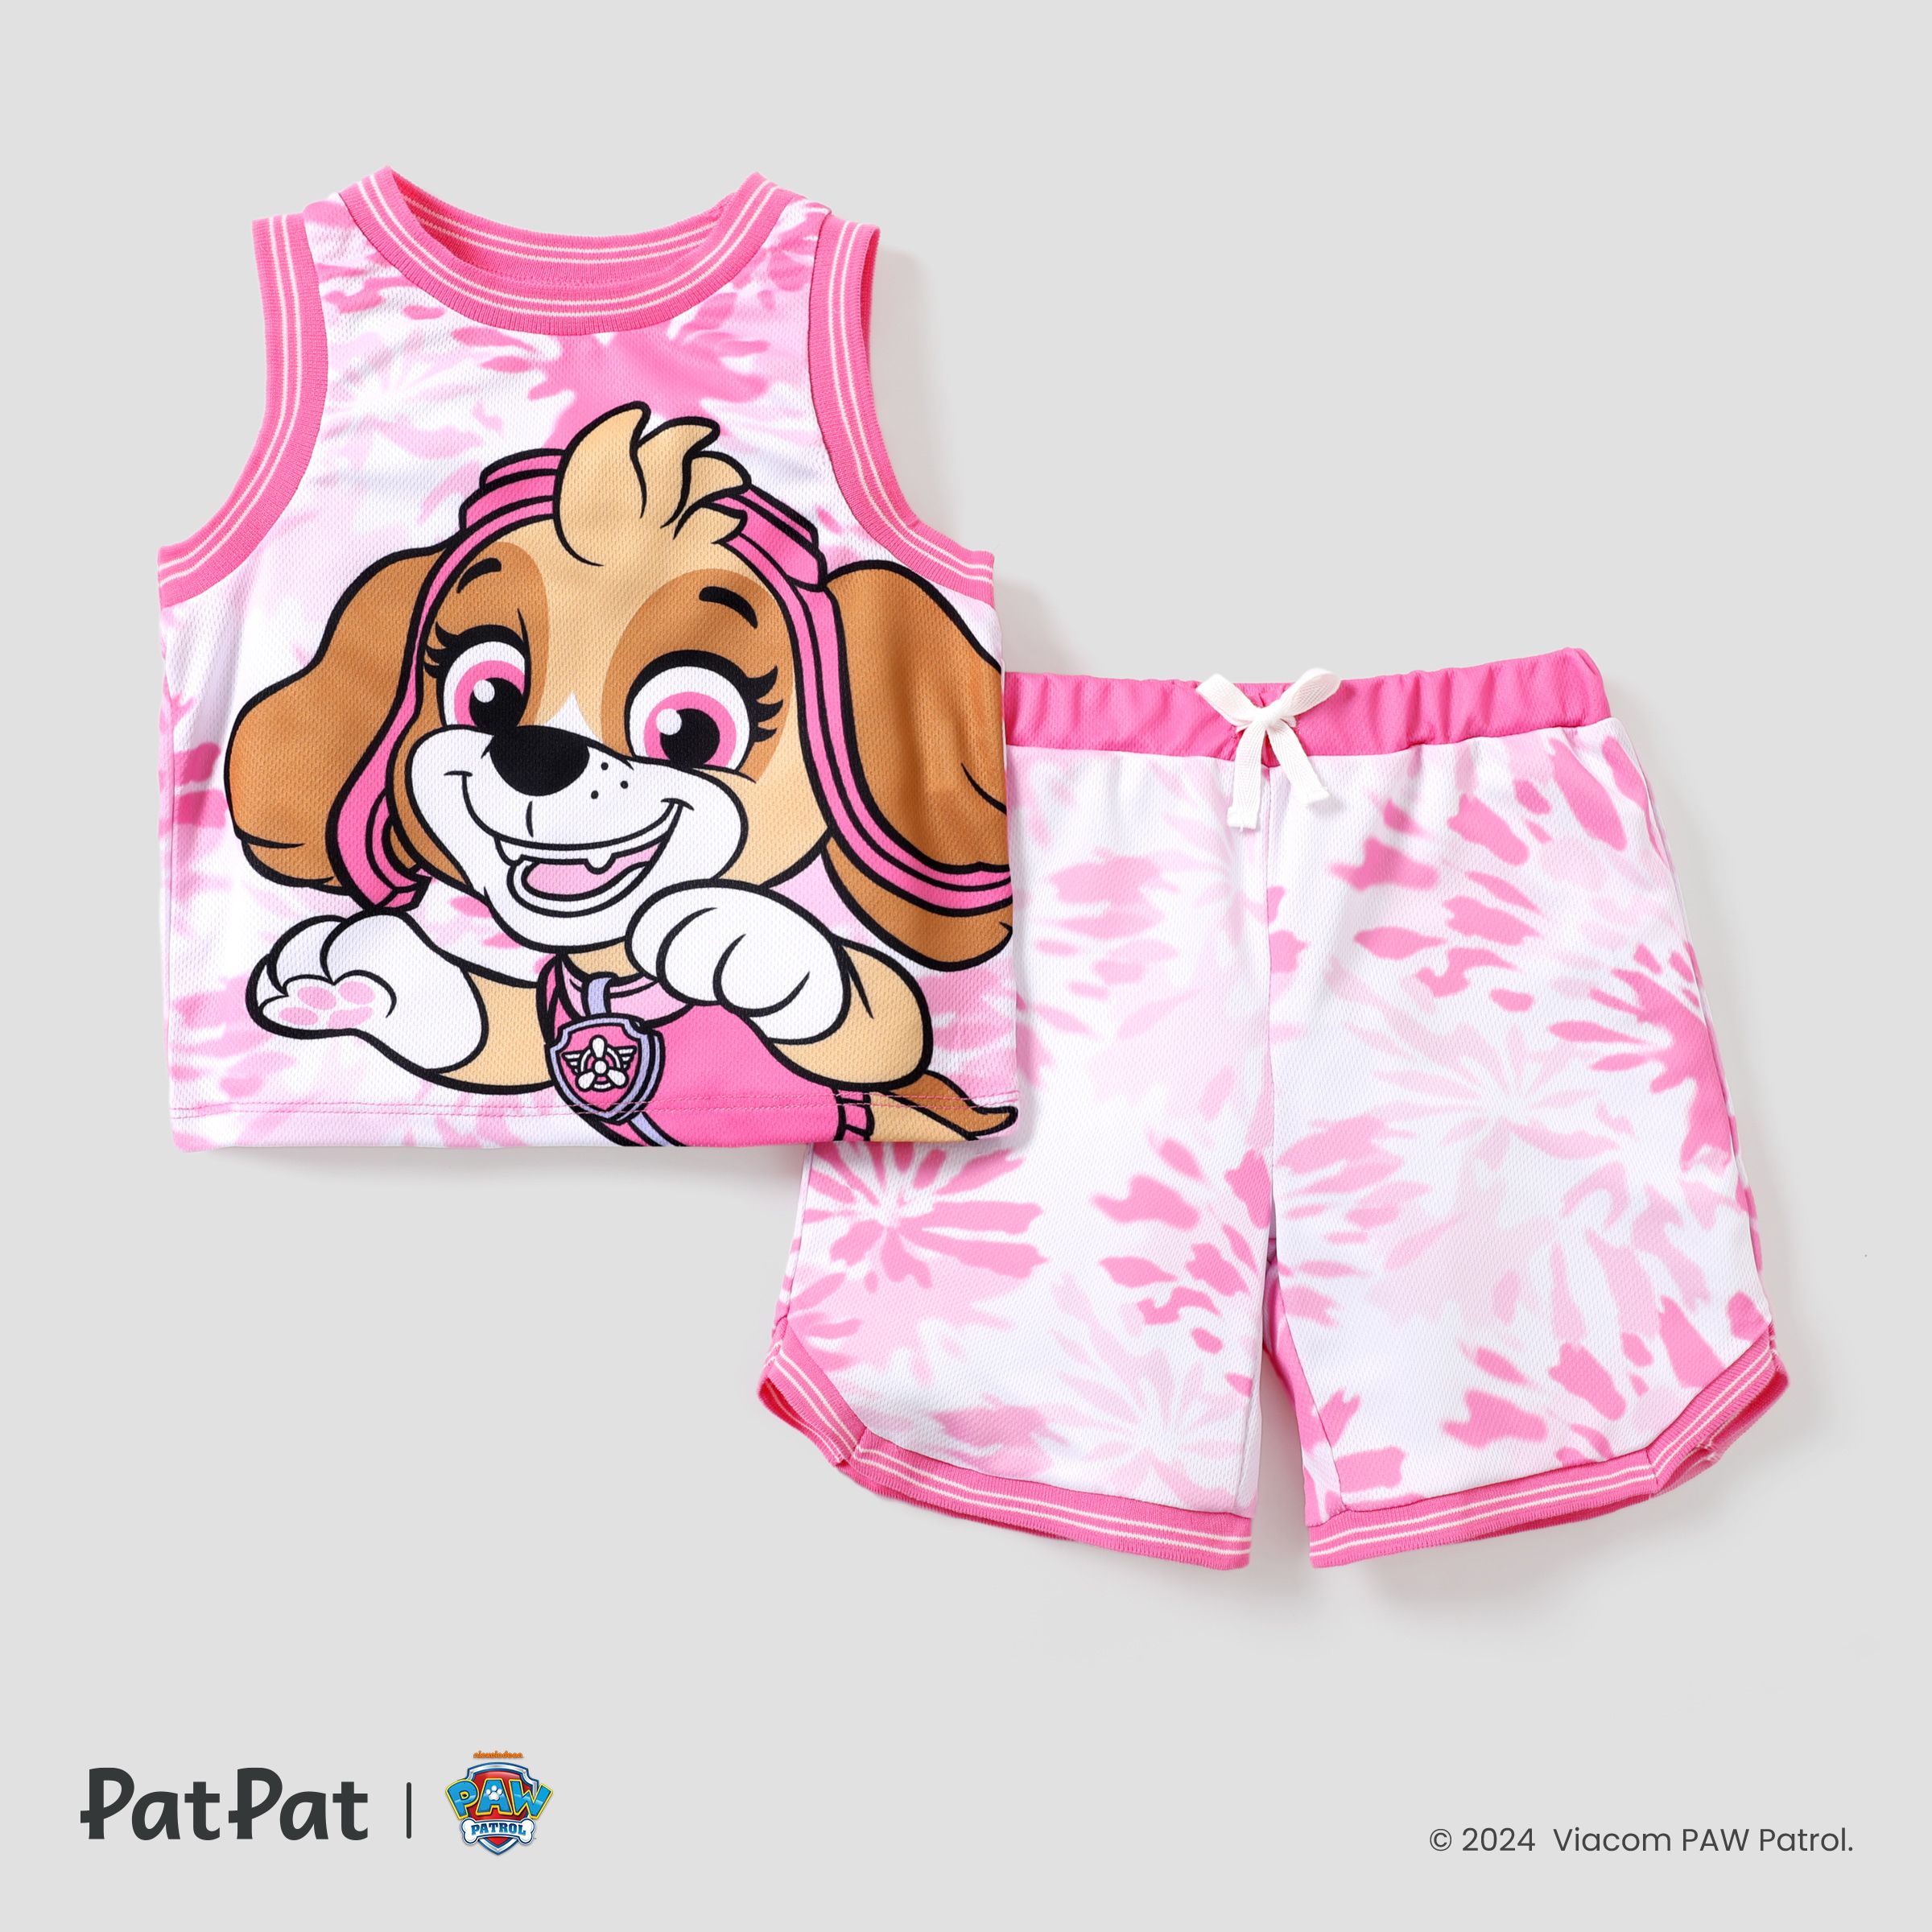 PAW Patrol Boys/Girls Children's Sports And Leisure Tie-Dye Print Effect Flat Machine Webbing Basketball Jersey Sets